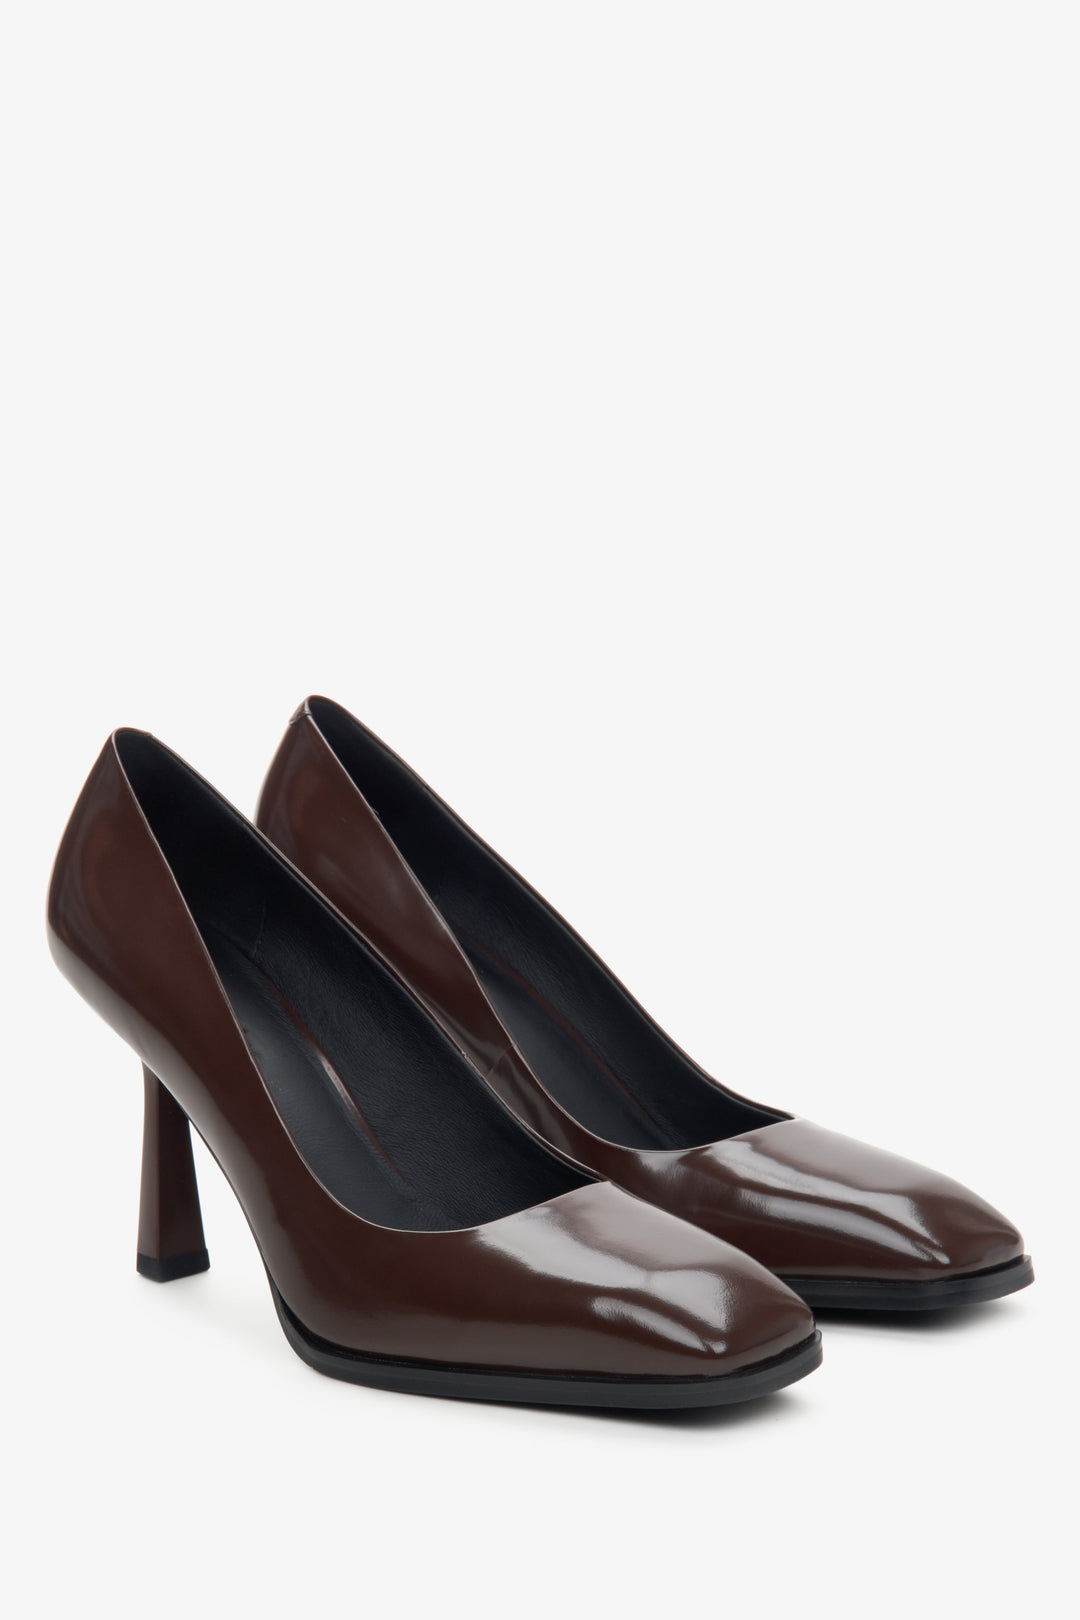 Estro women's dark brown leather high-heeled shoes.